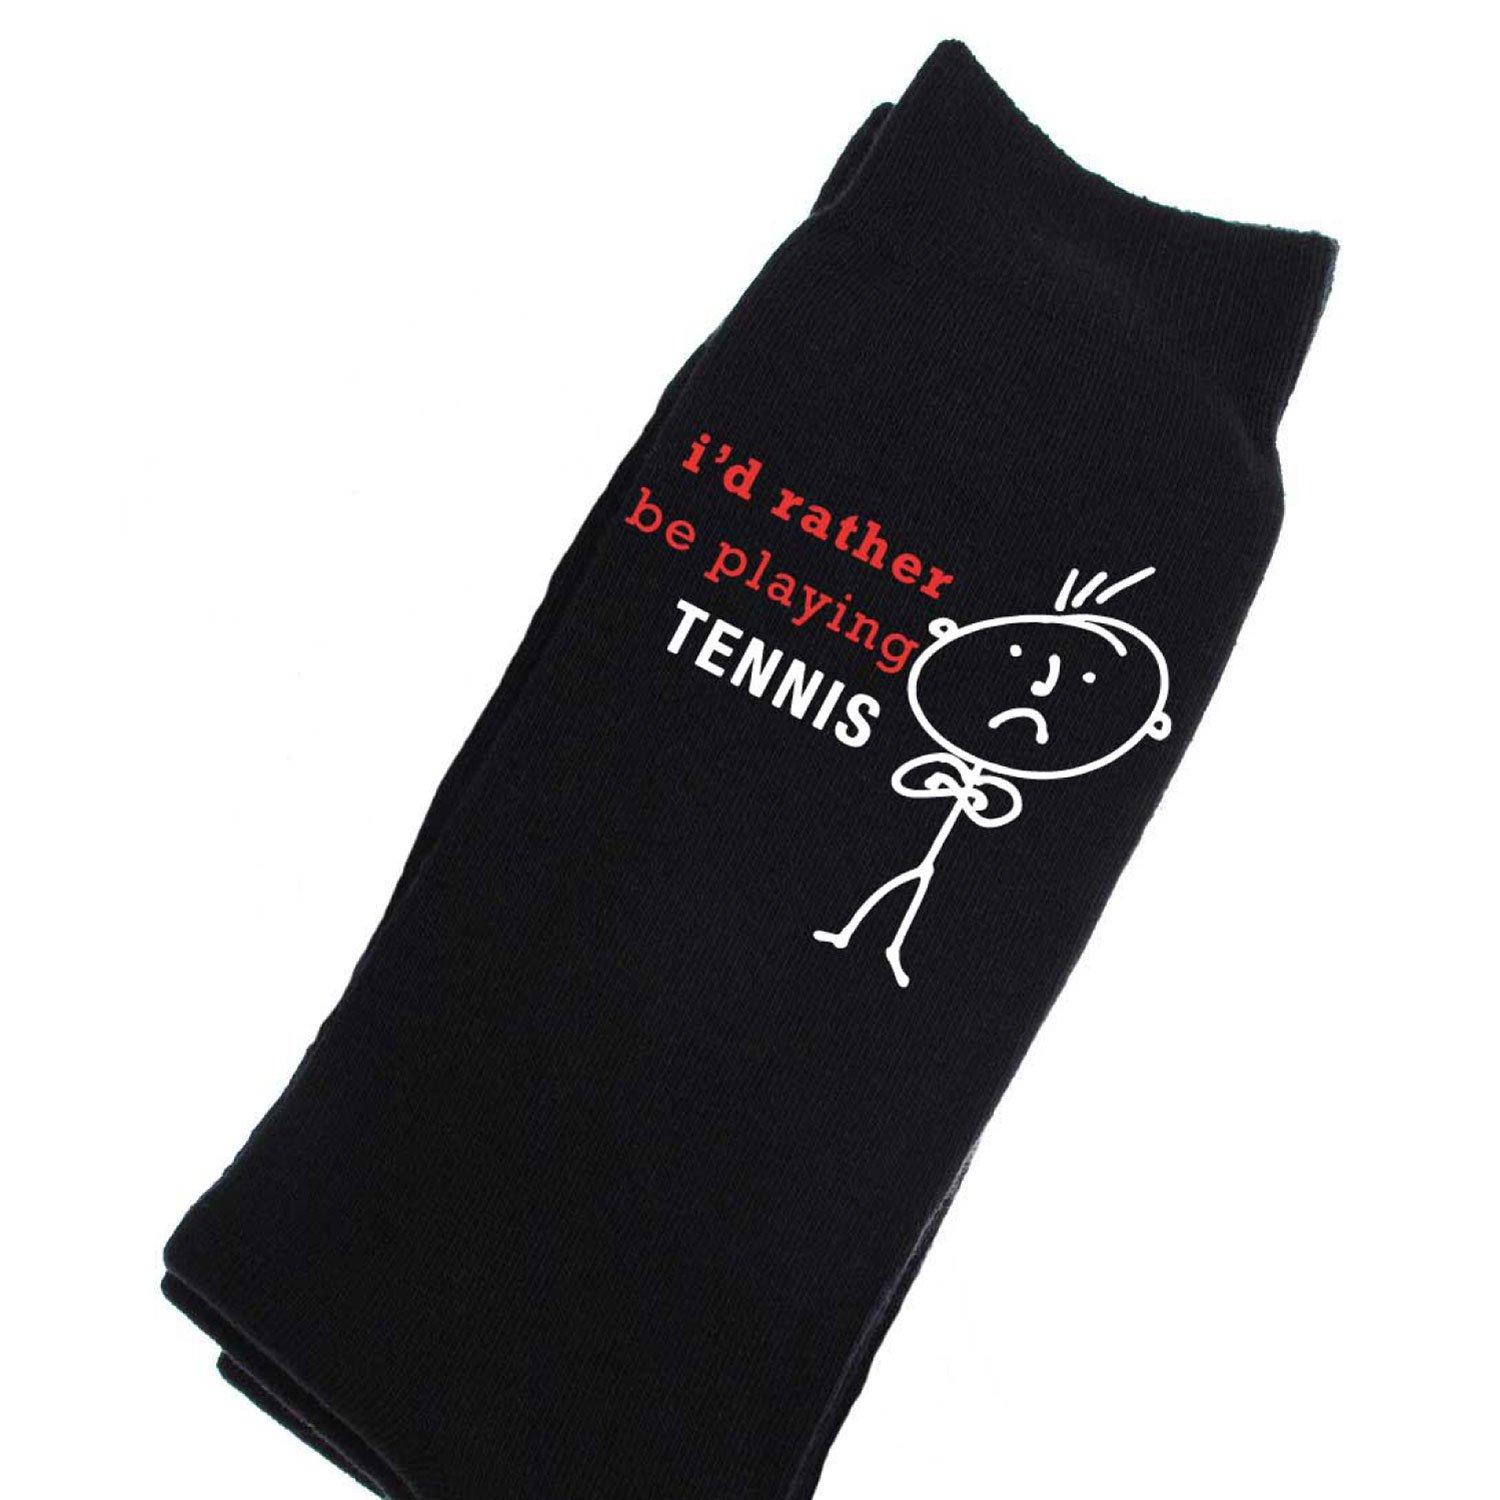 Mens Rather Be Playing Tennis Black Calf Socks